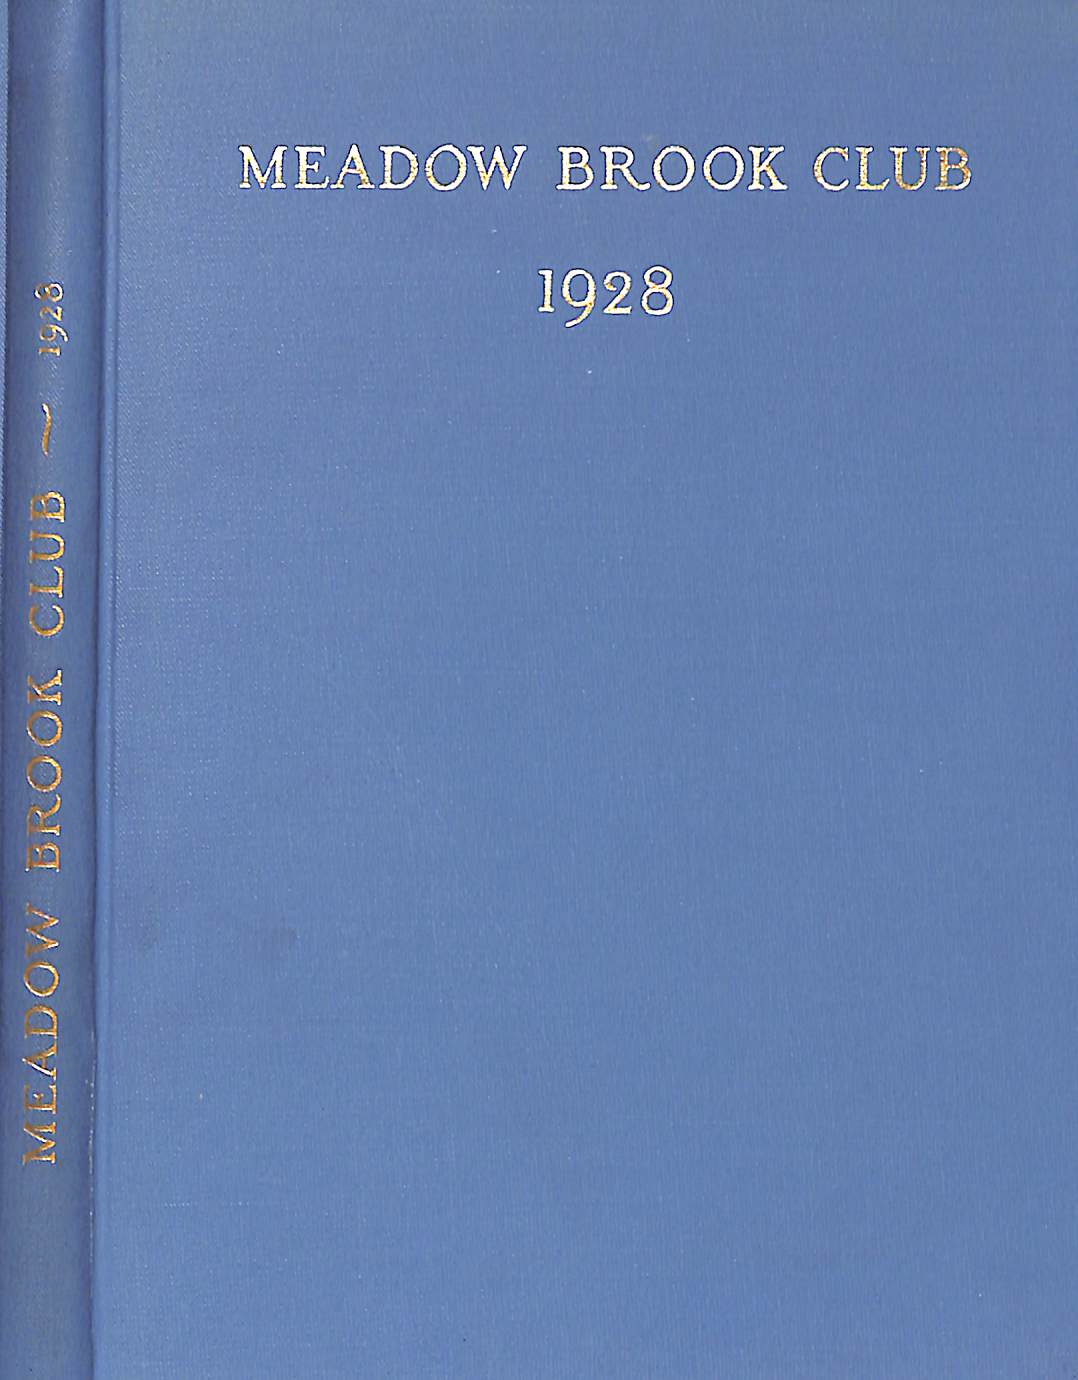 "Meadow Brook Club M.B.H. Year Book" 1928